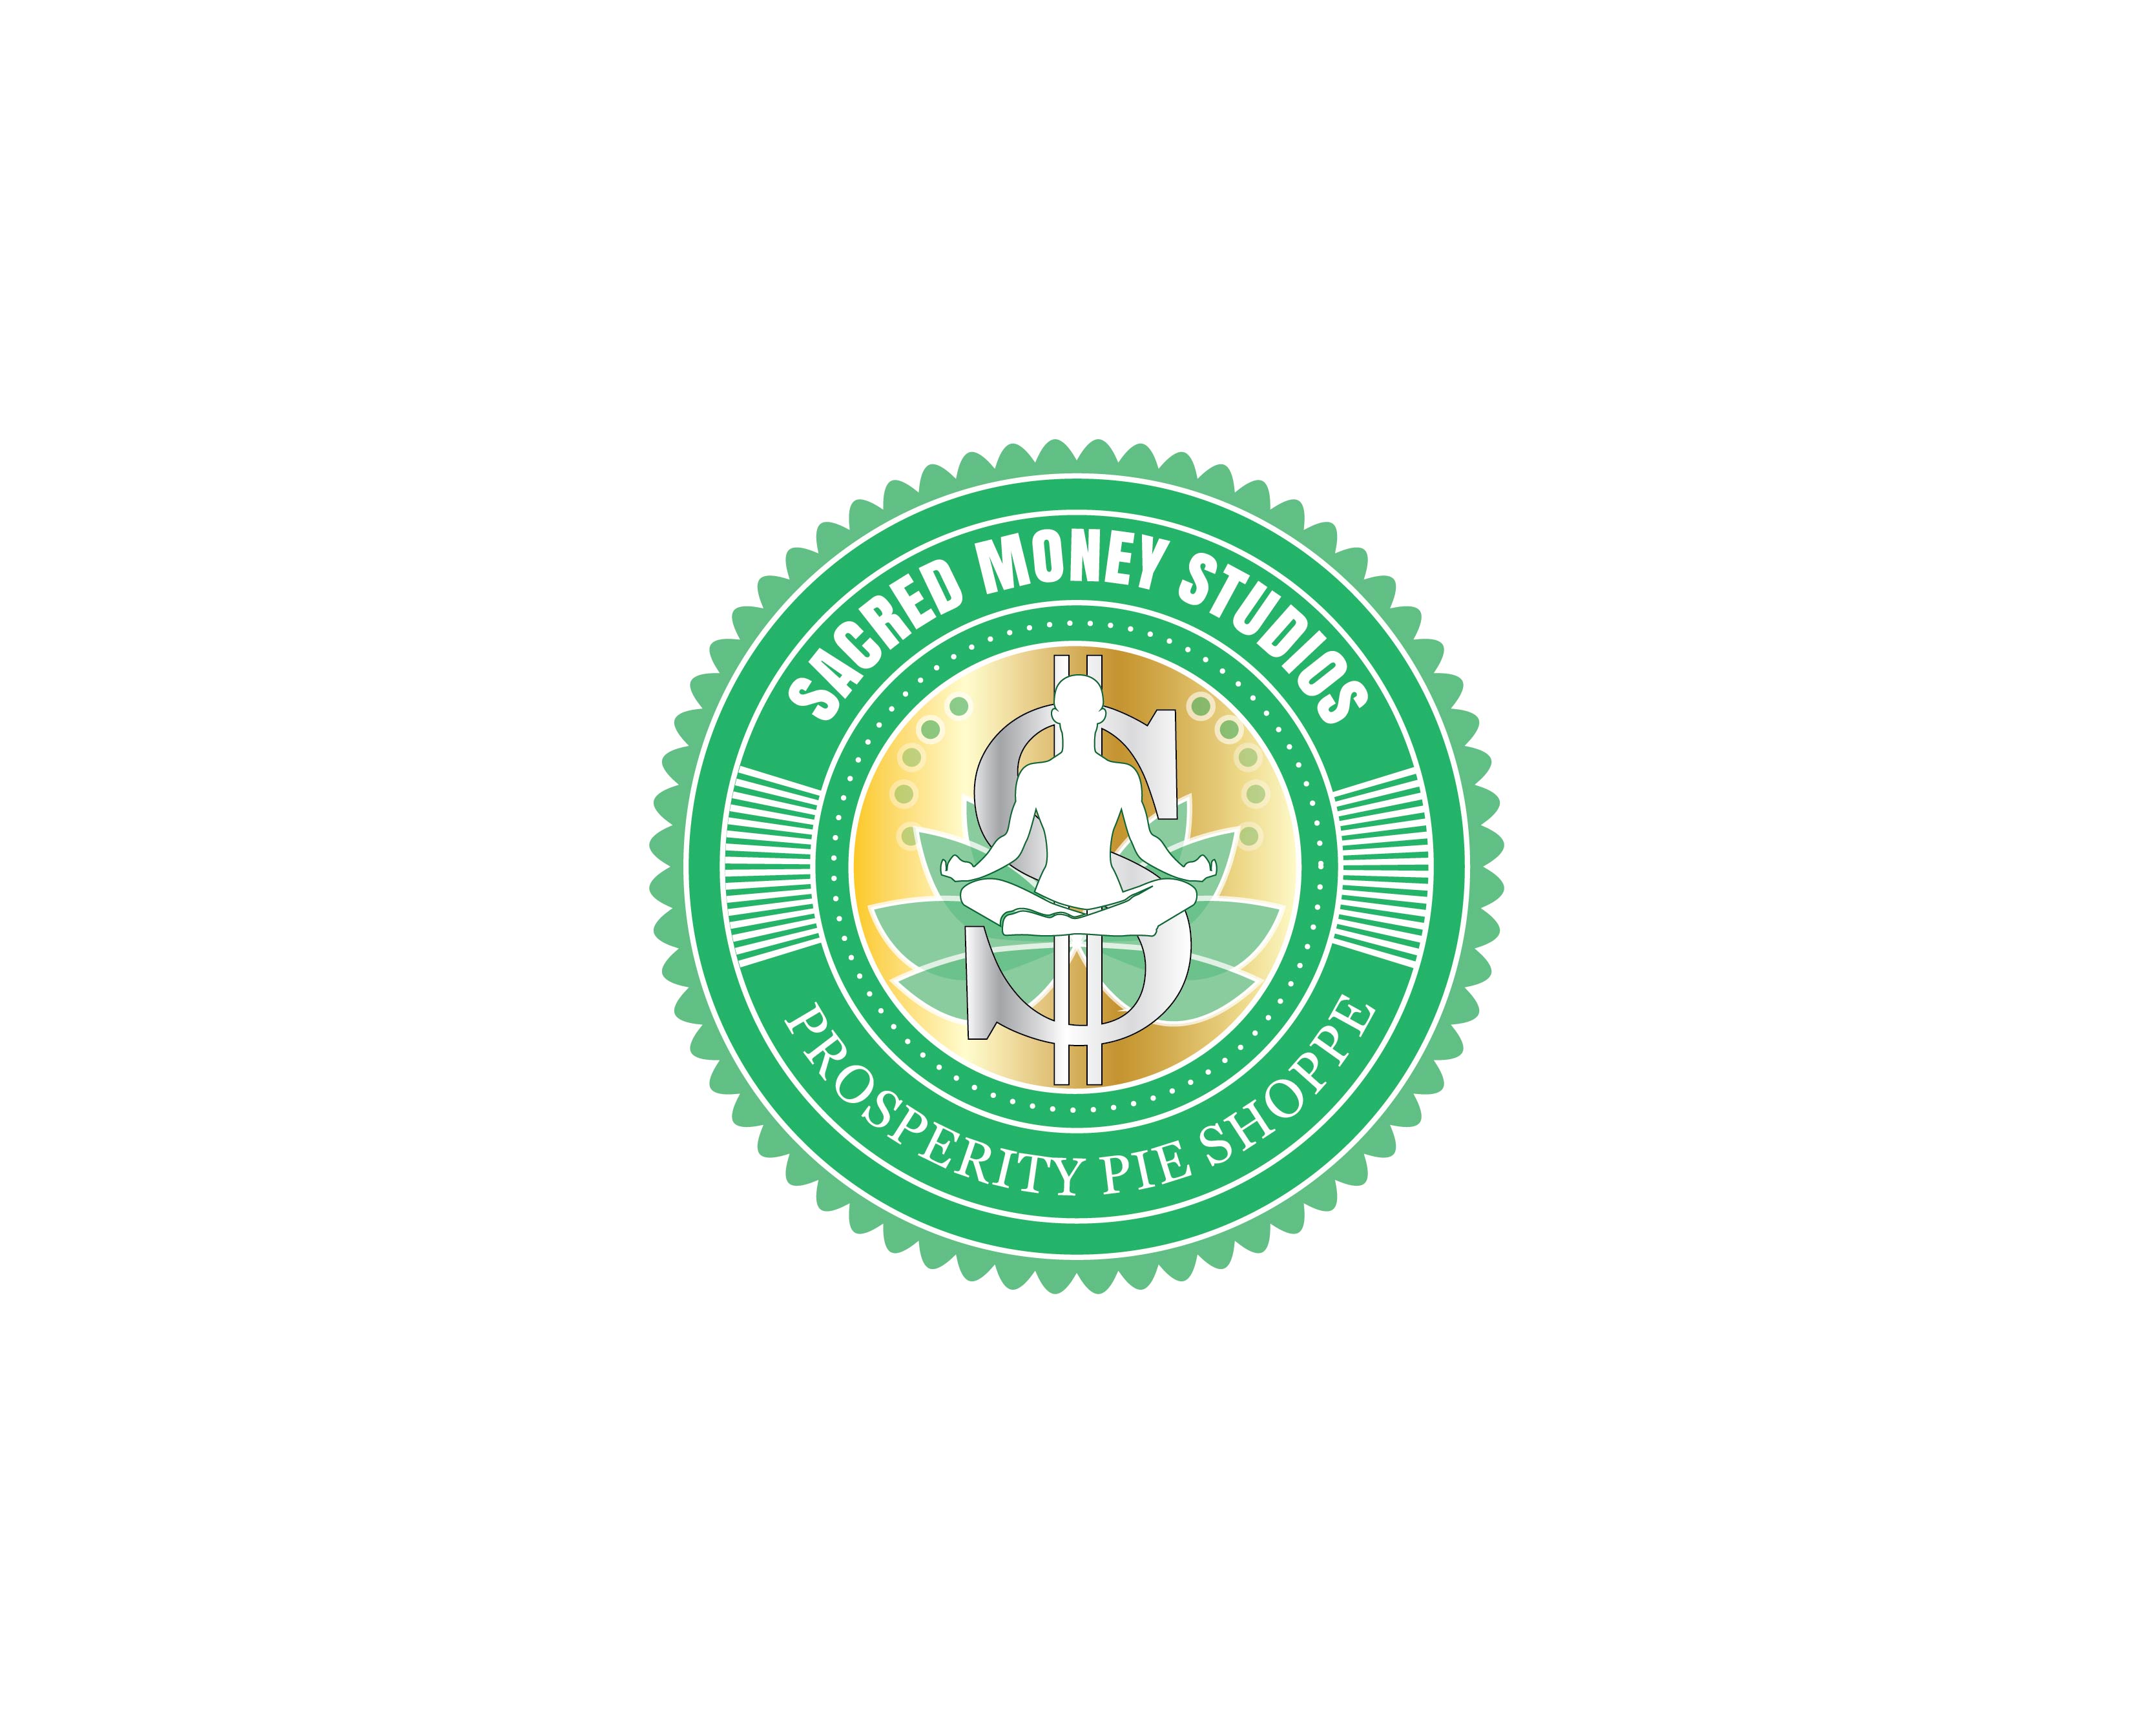 Logo Design entry 1095585 submitted by HAFIZ to the Logo Design for Sacred Money Studios (TM)/Prosperity Pie Shoppe run by Sacredmoneystudios@gmail.com